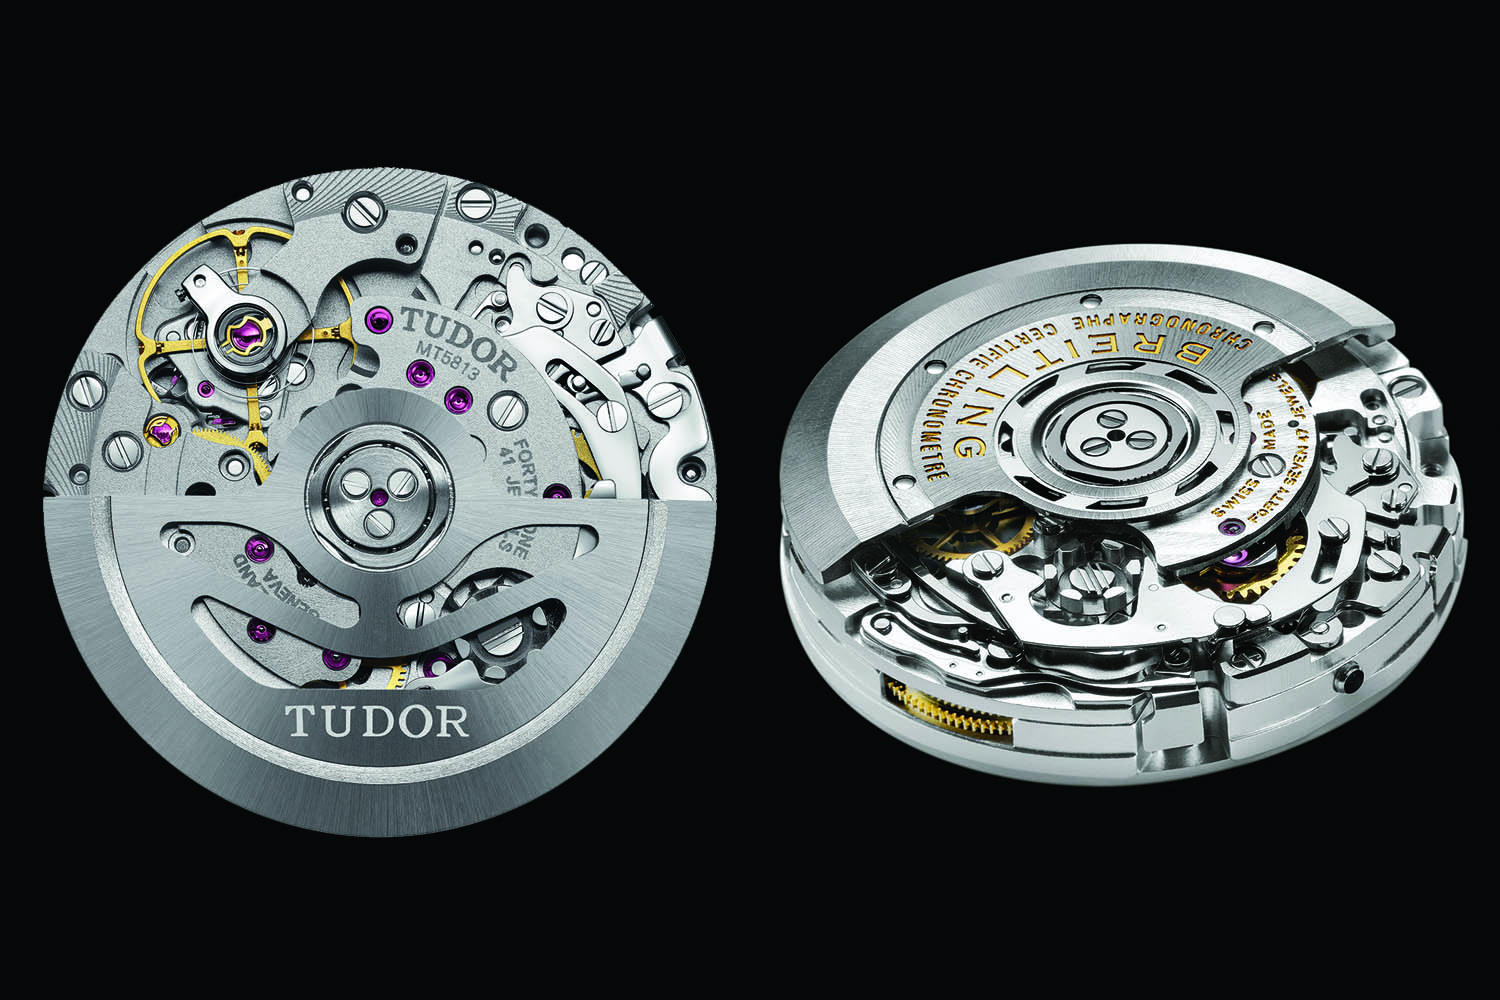 Tudor MT5813 - Breitling B01 Chronograph movement